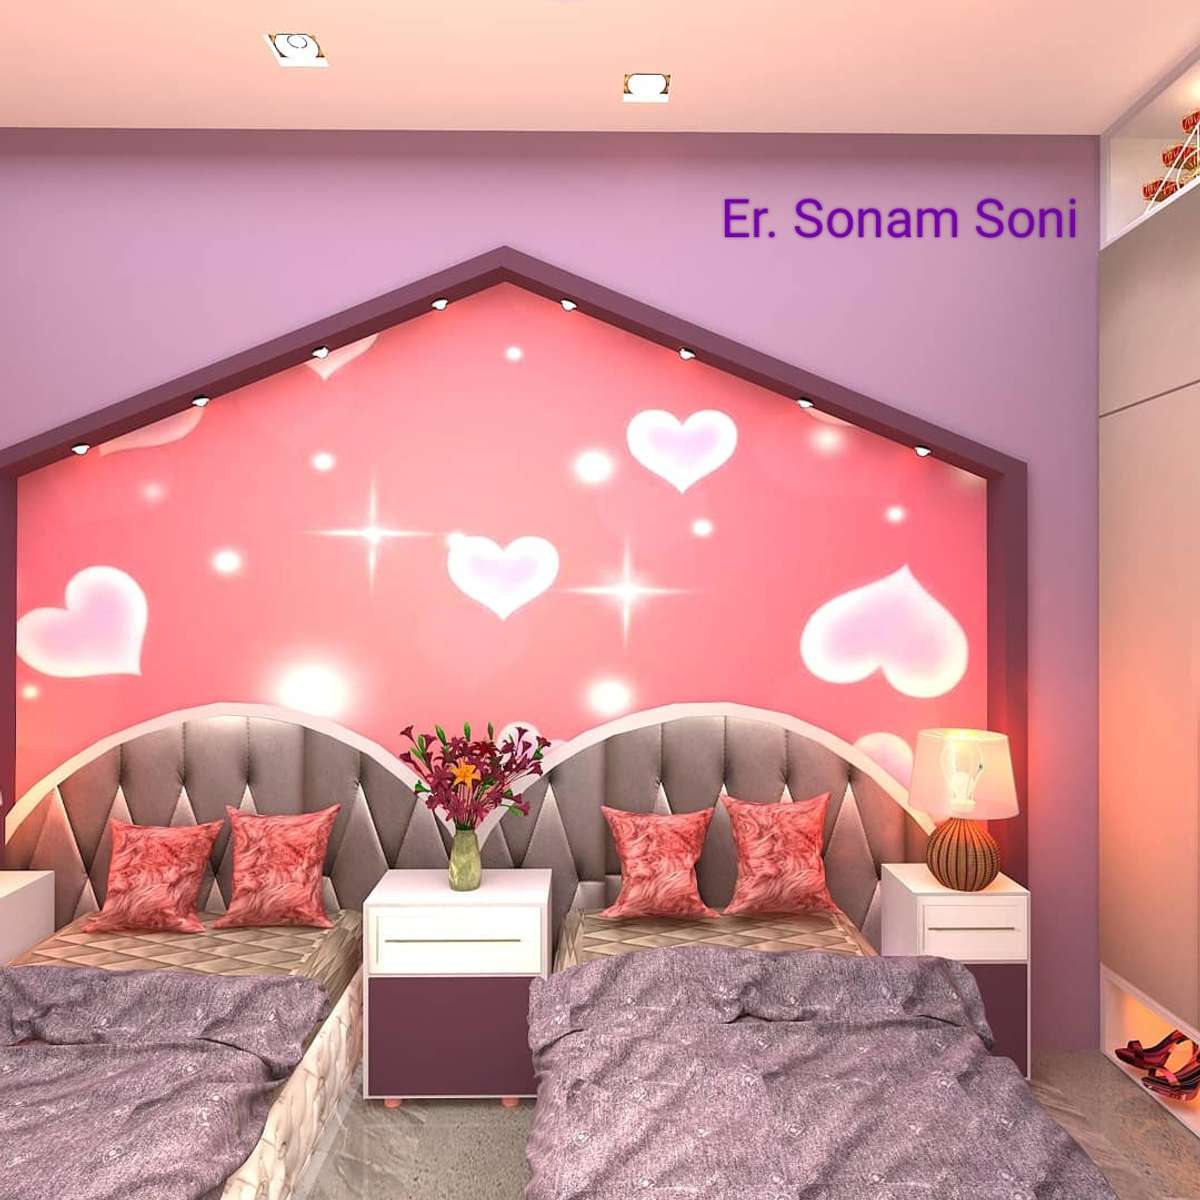 Furniture, Bedroom Designs by Civil Engineer Er Sonam soni, Indore | Kolo